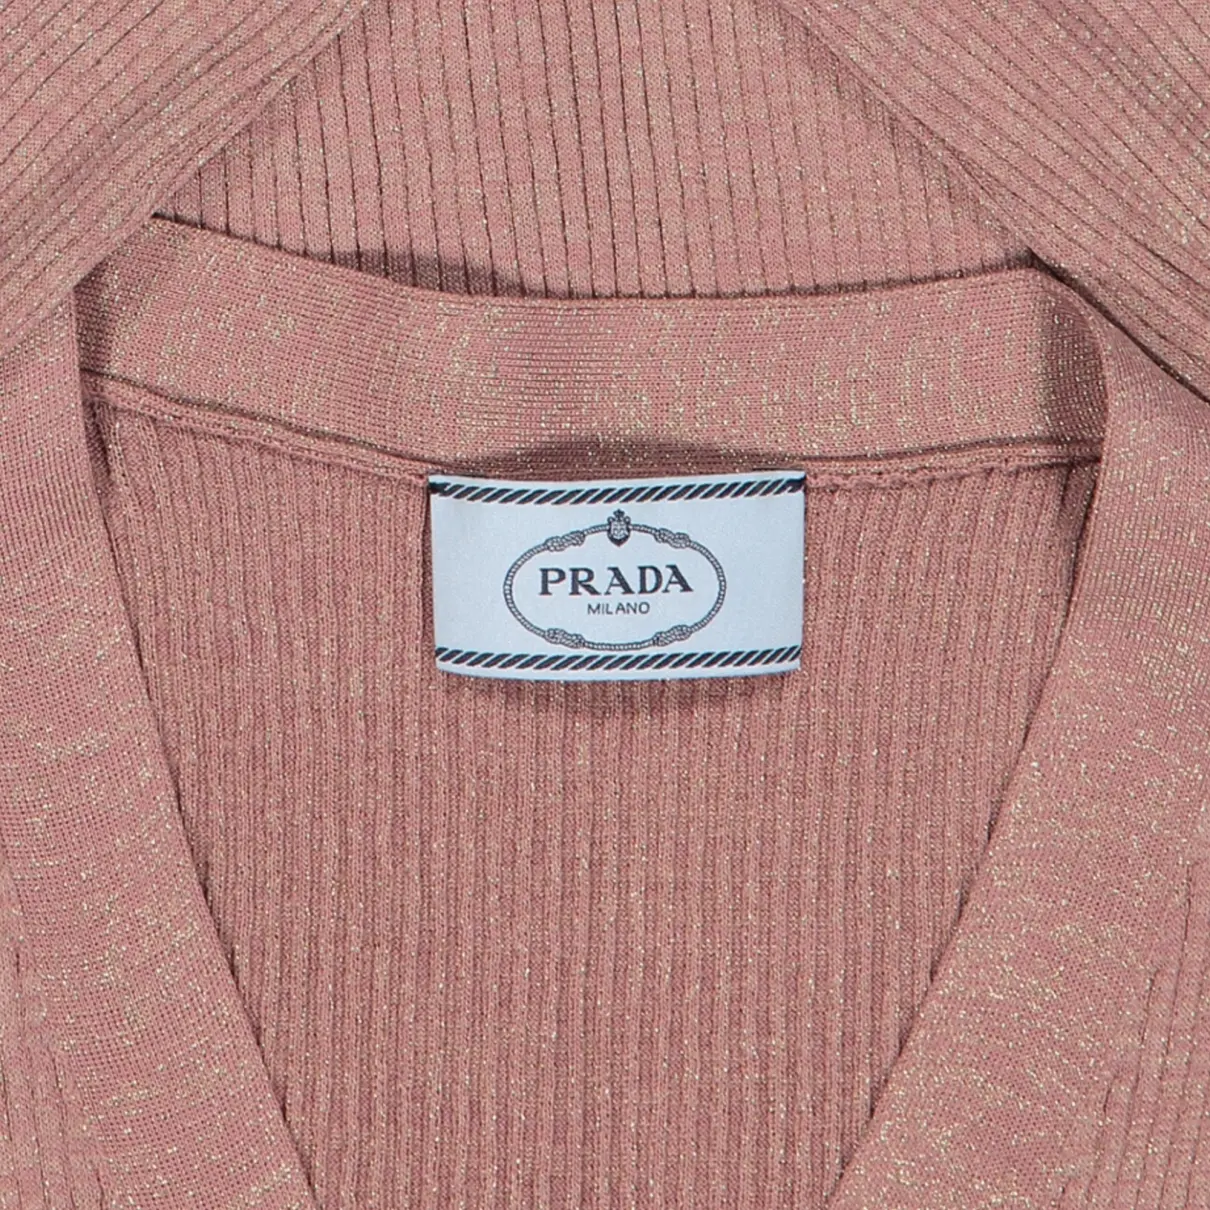 Buy Prada Cardigan online